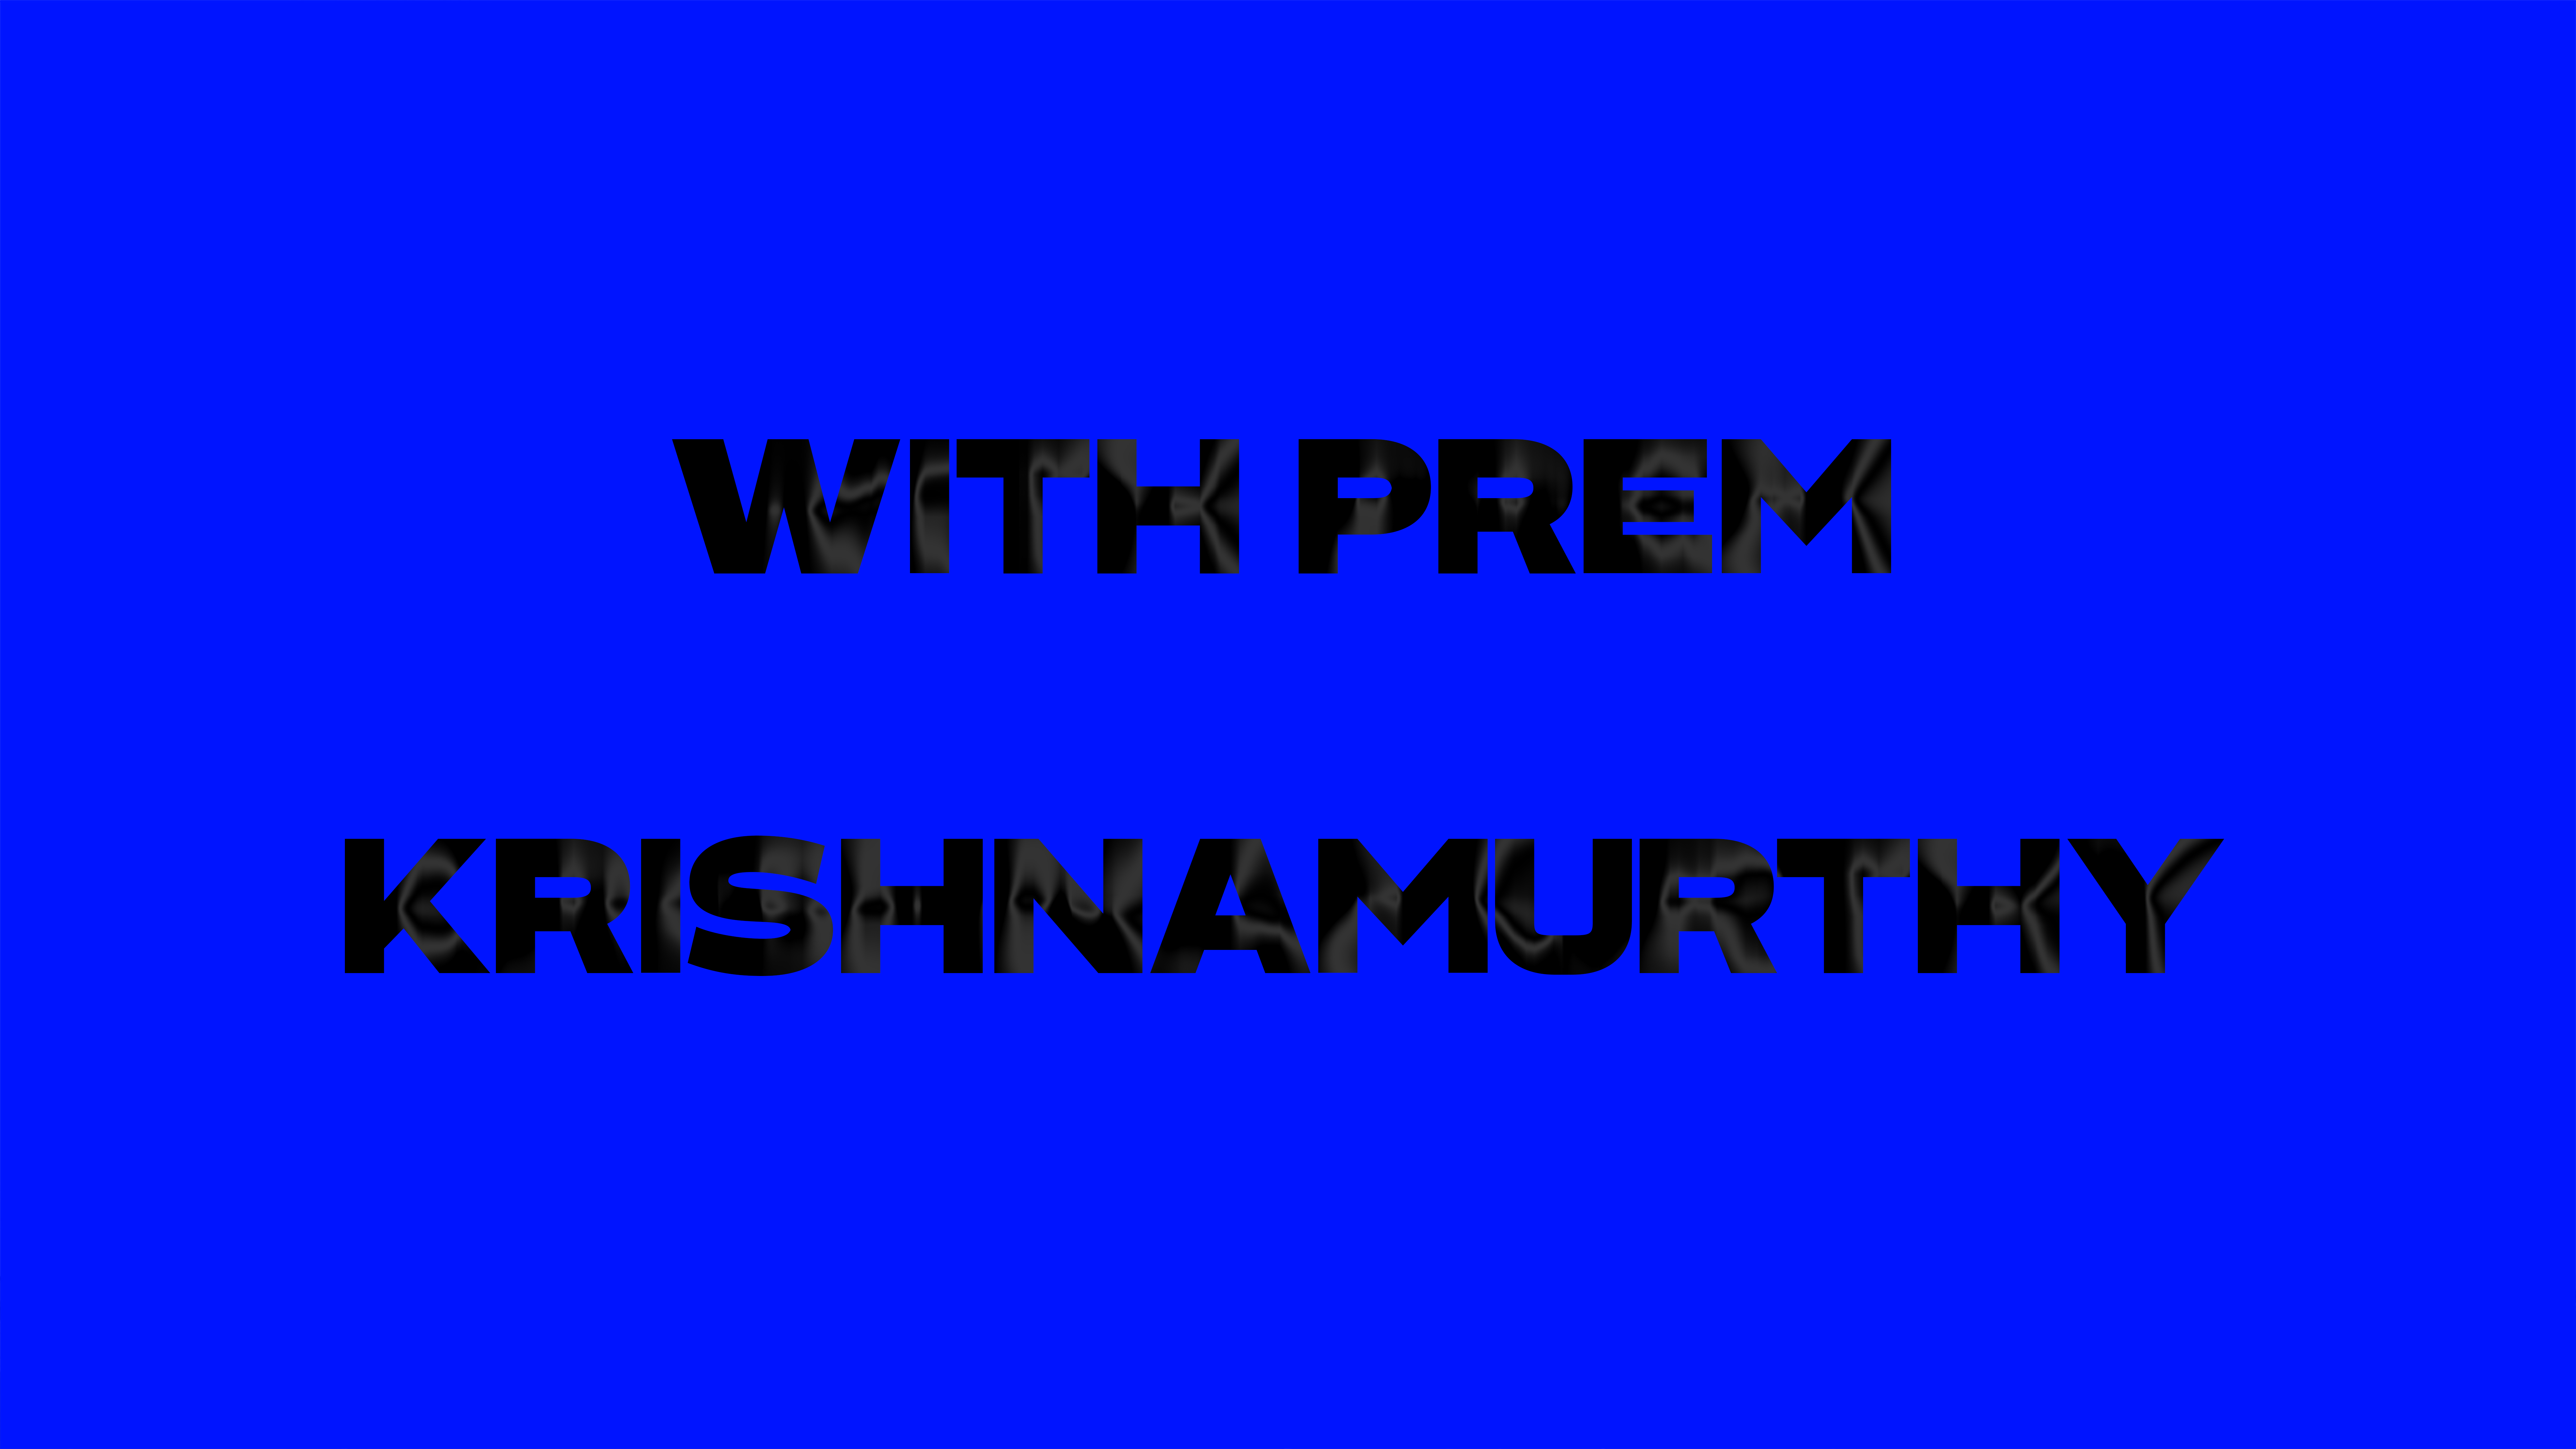 with Prem Krishnamurthy text is written in black on blue background